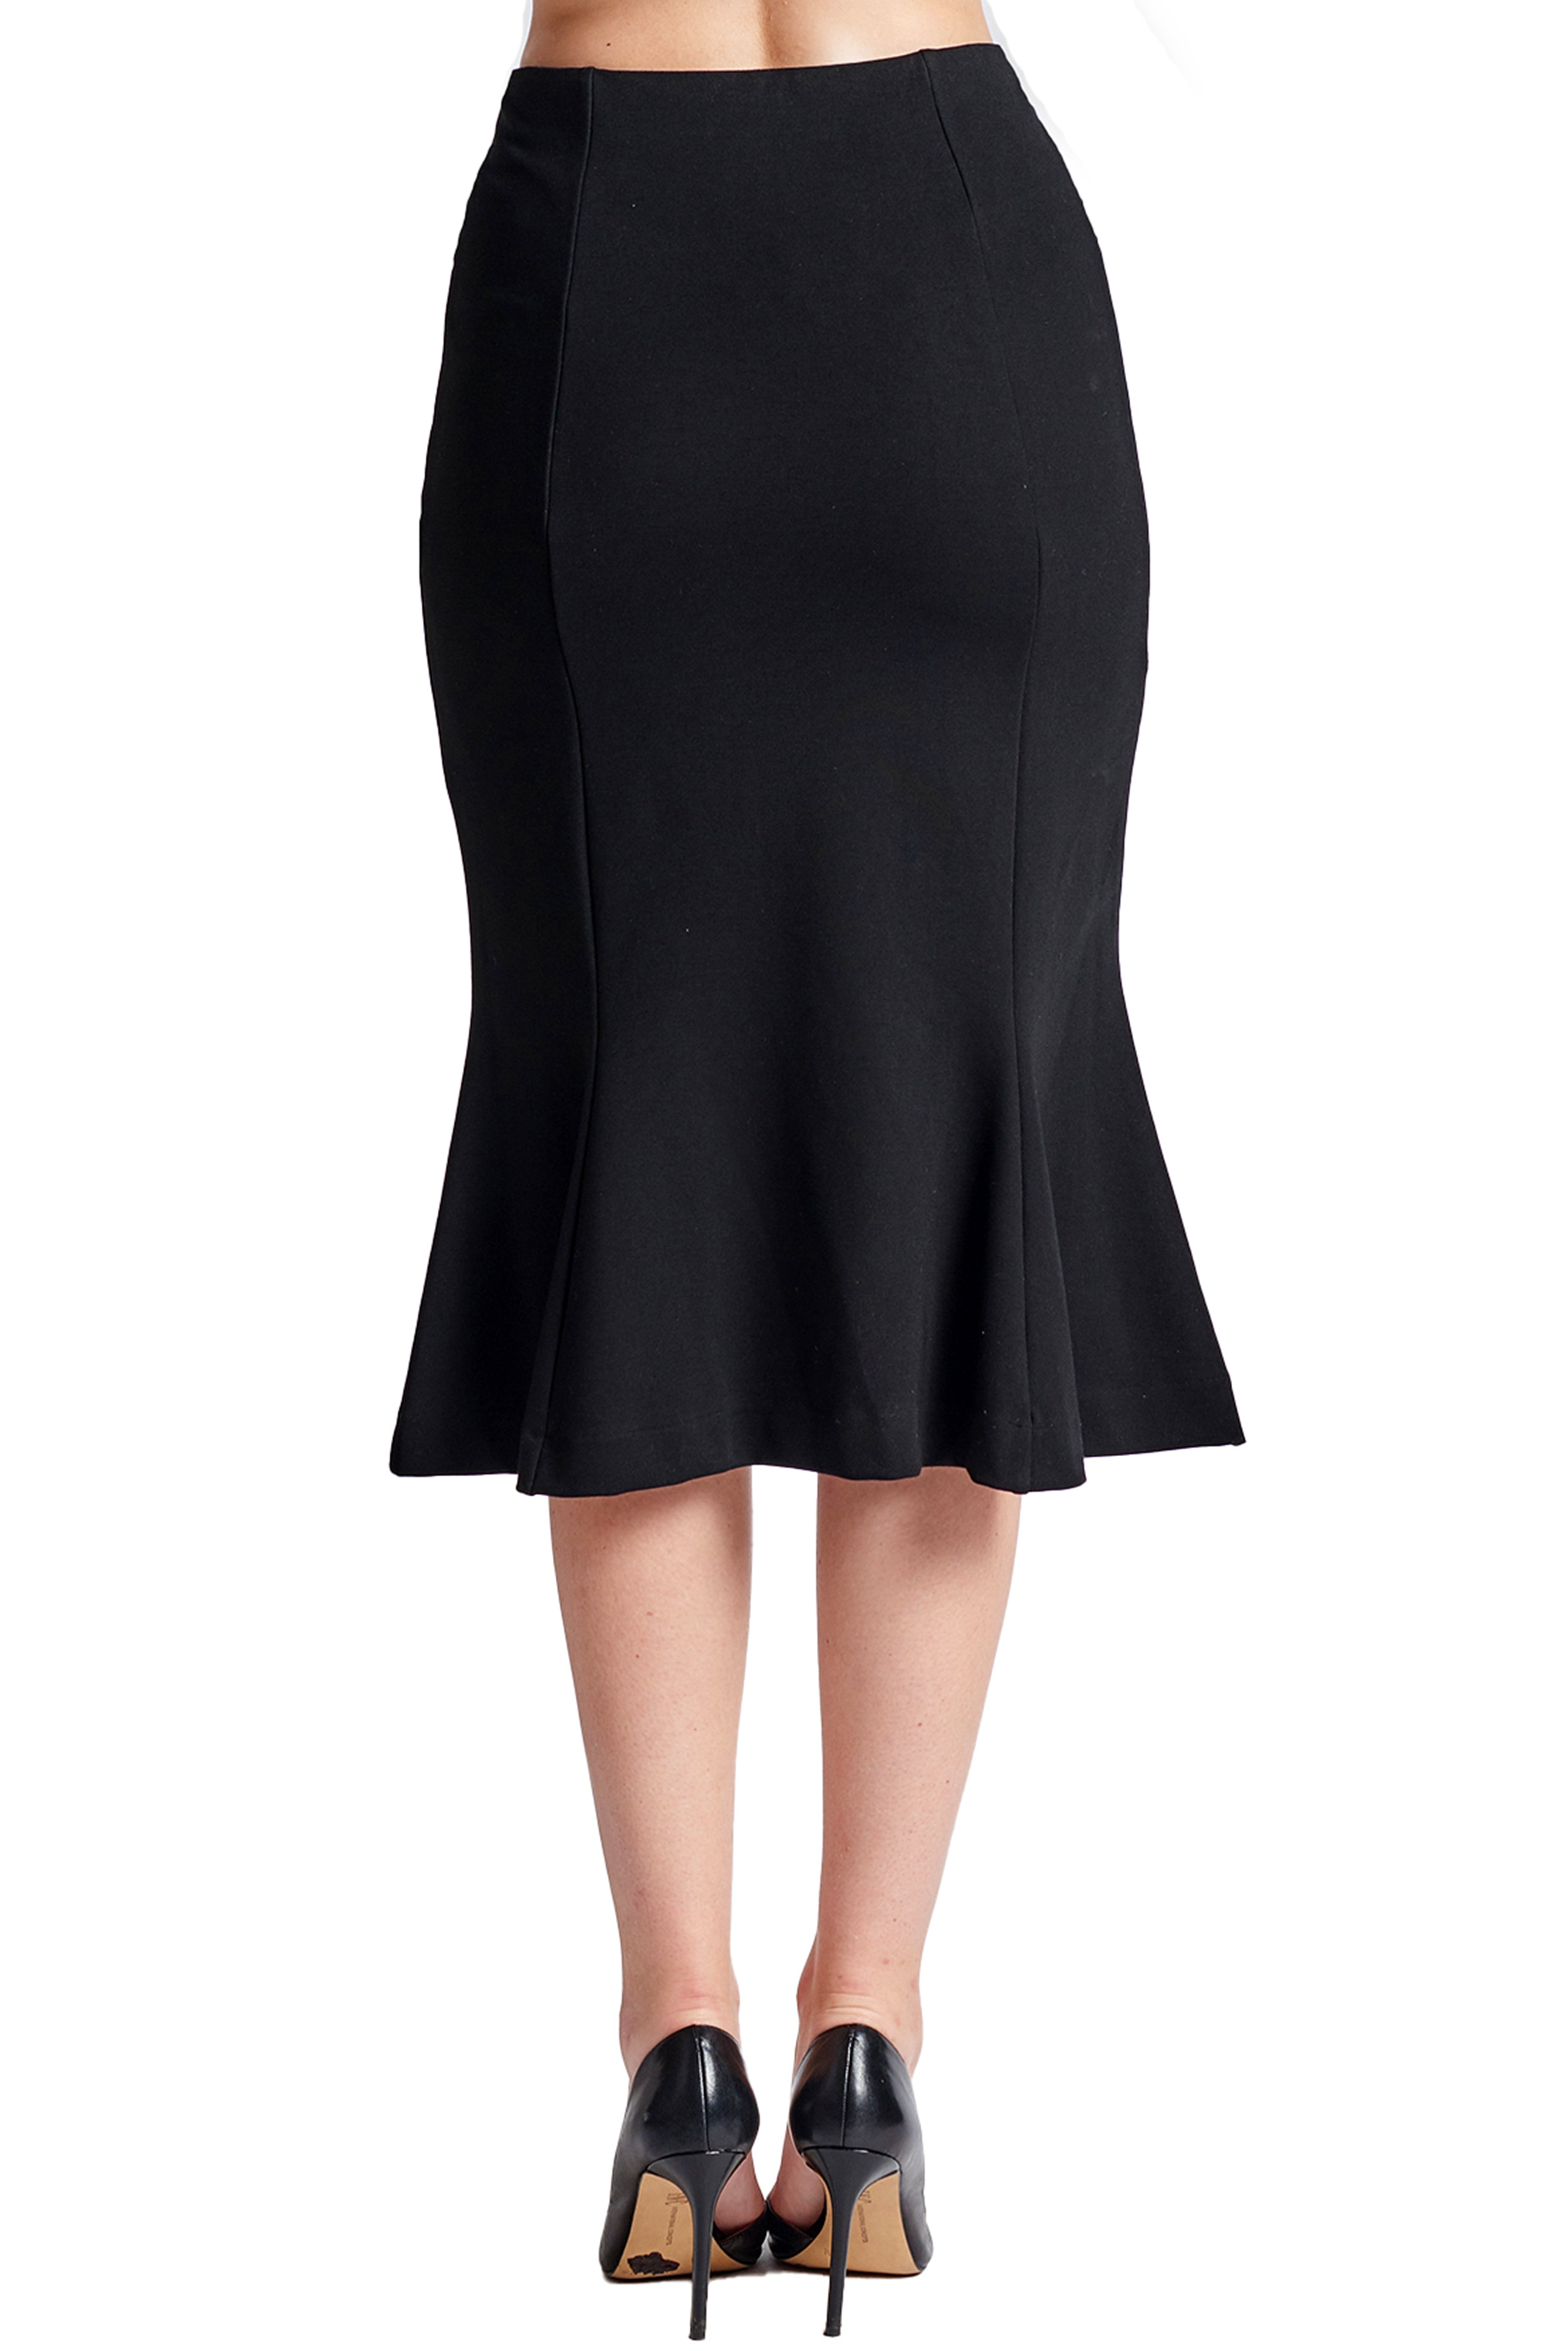 Back view of model wearing the Simona Maghen Sarit Skirt, black knit Ponte seamed midi mermaid skirt.